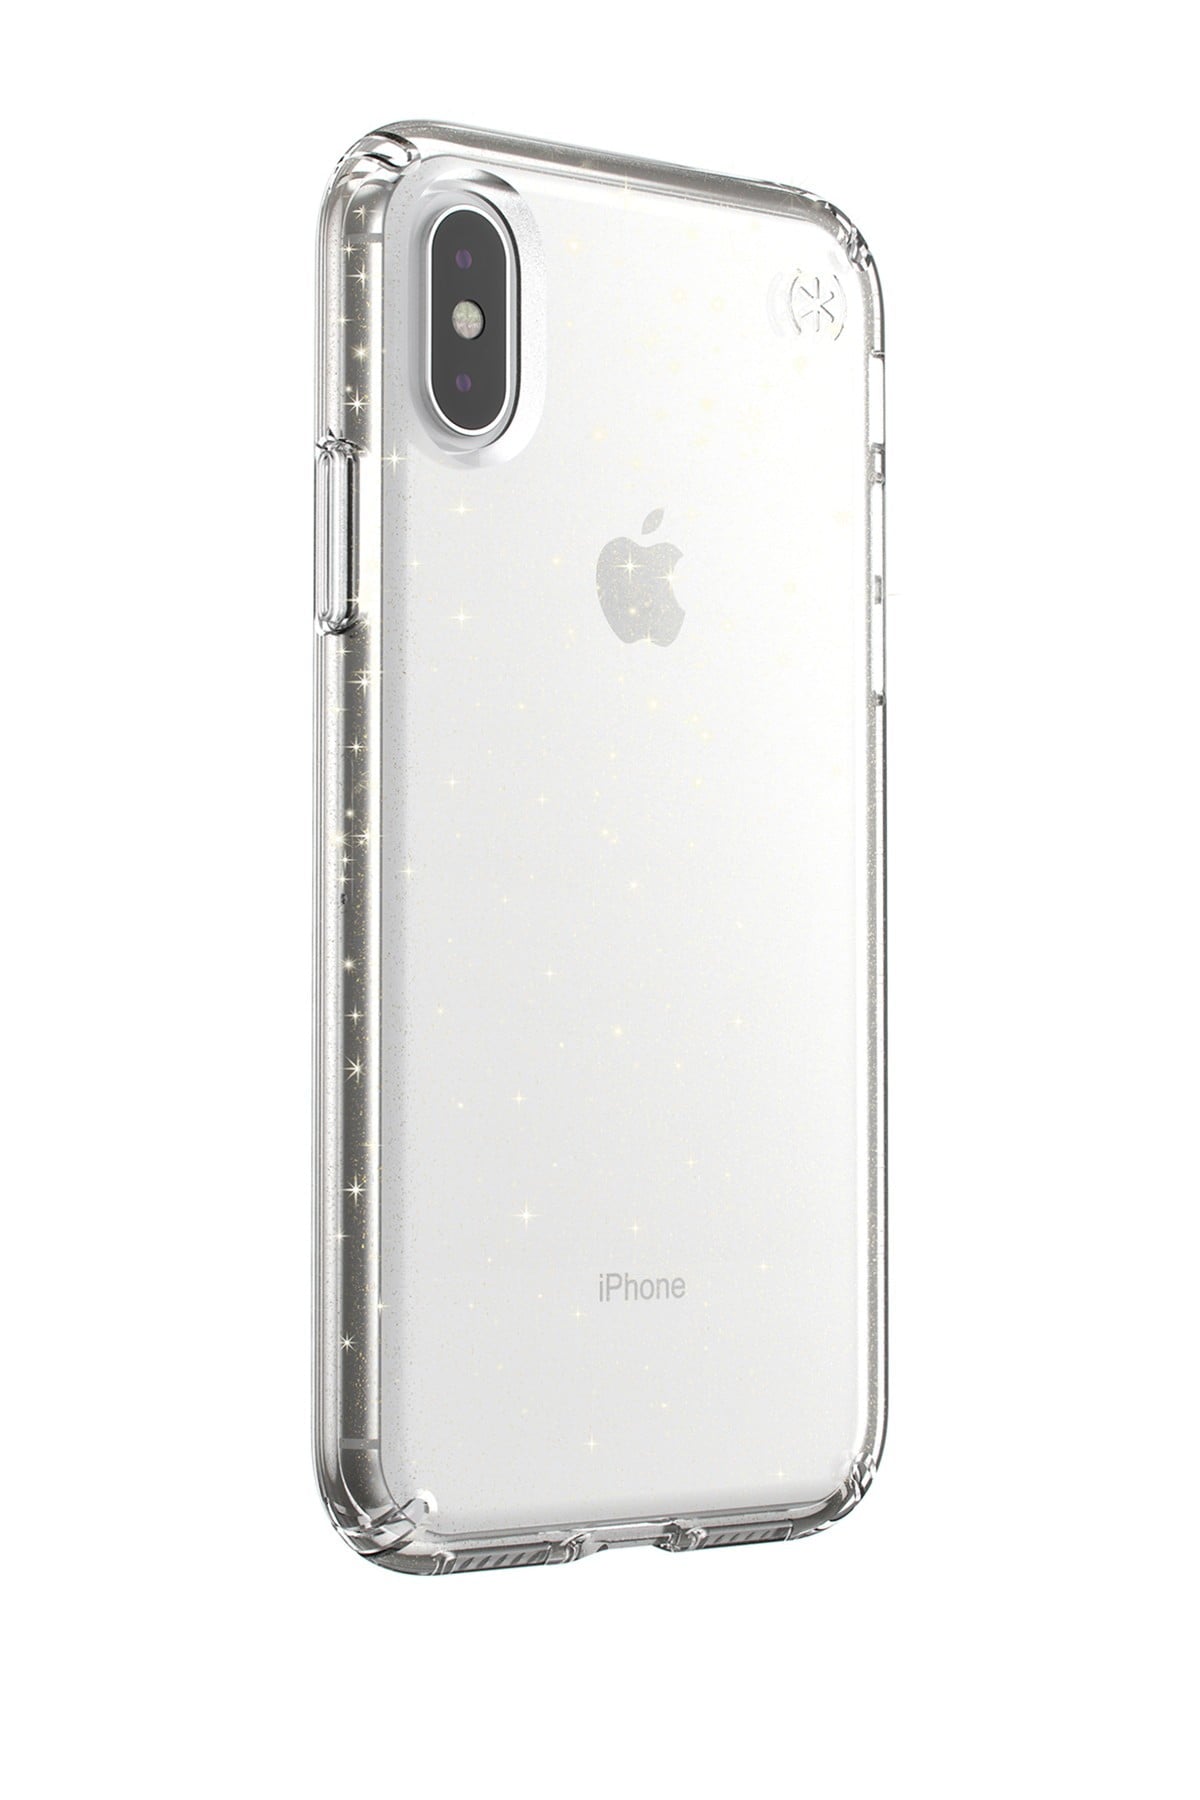 Funda Speck para iPhone XR - Transparente